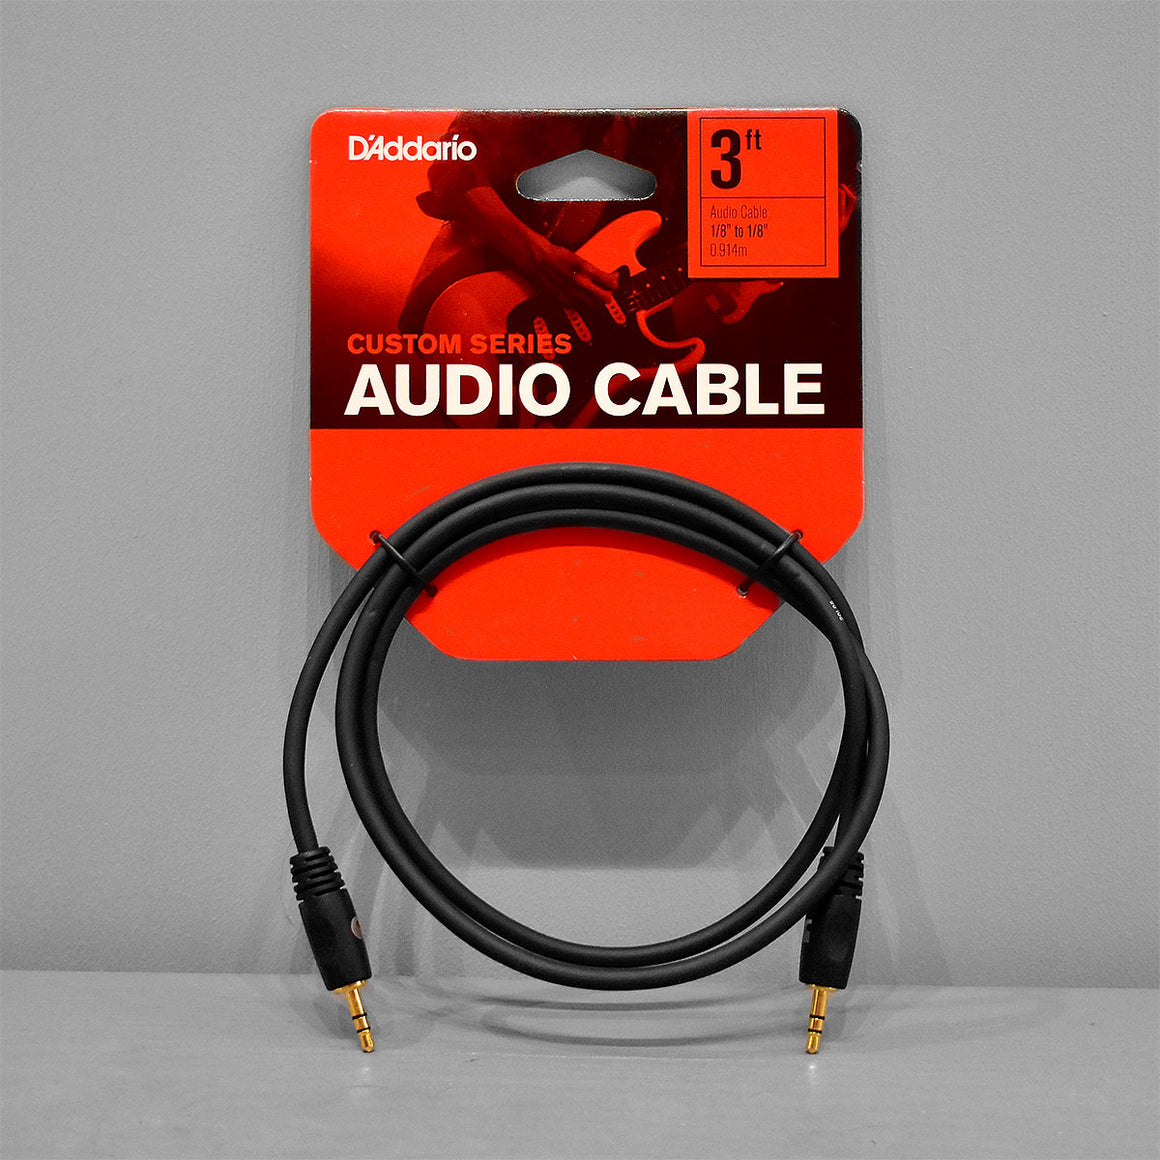 D'Addario Custom Series 1/8" To 1/8" Audio Cable